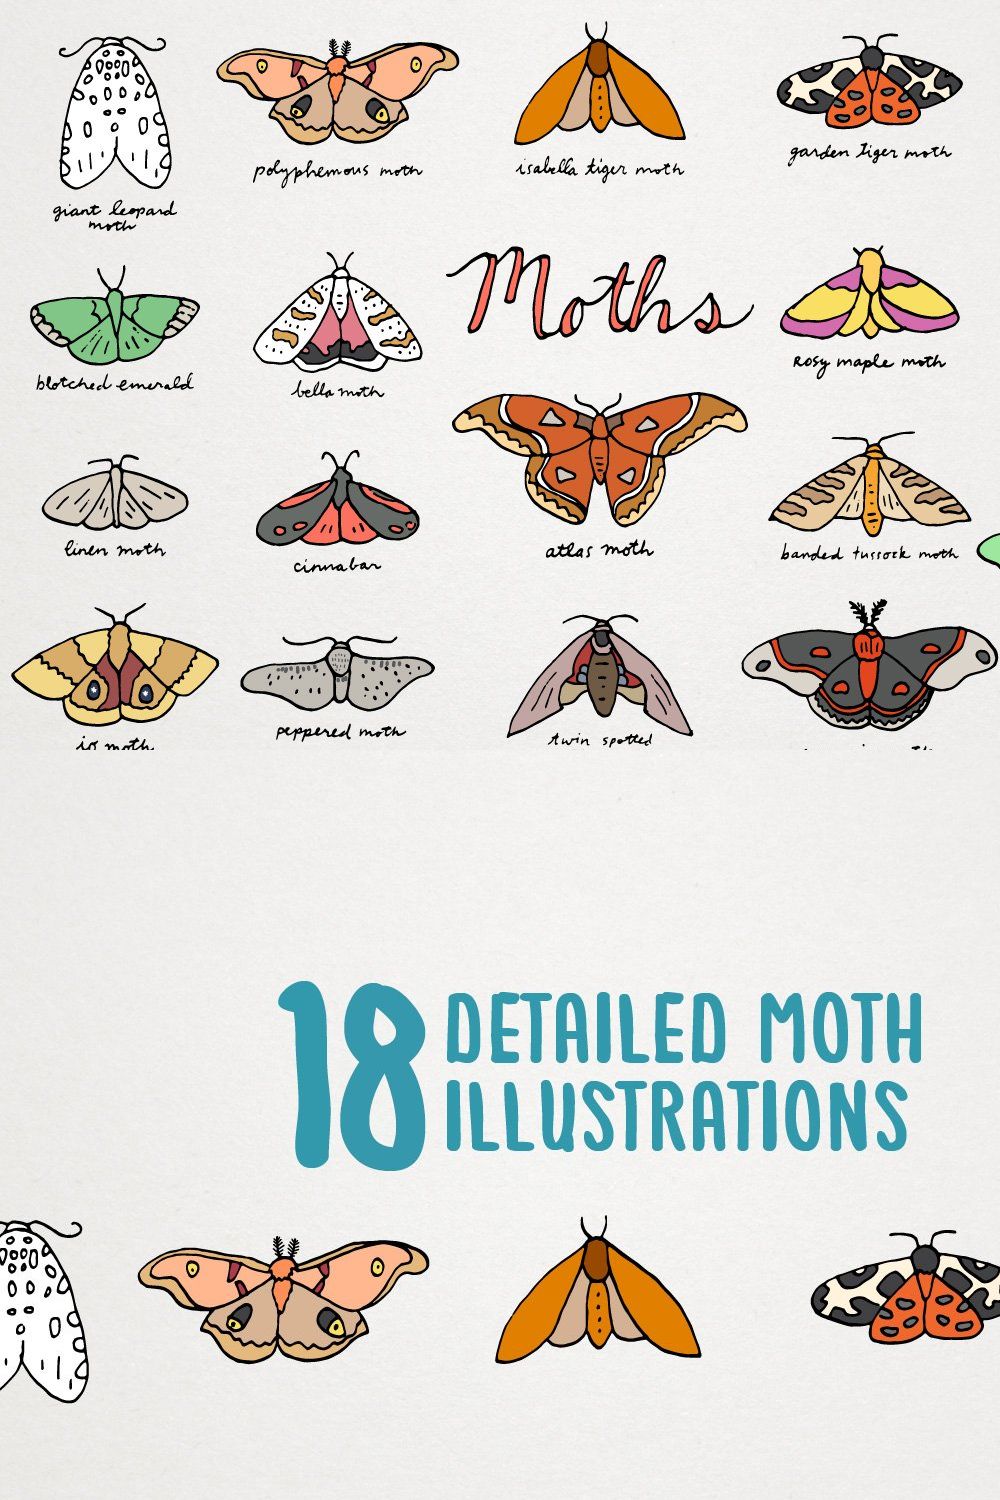 Moths of the World Illustration pinterest preview image.